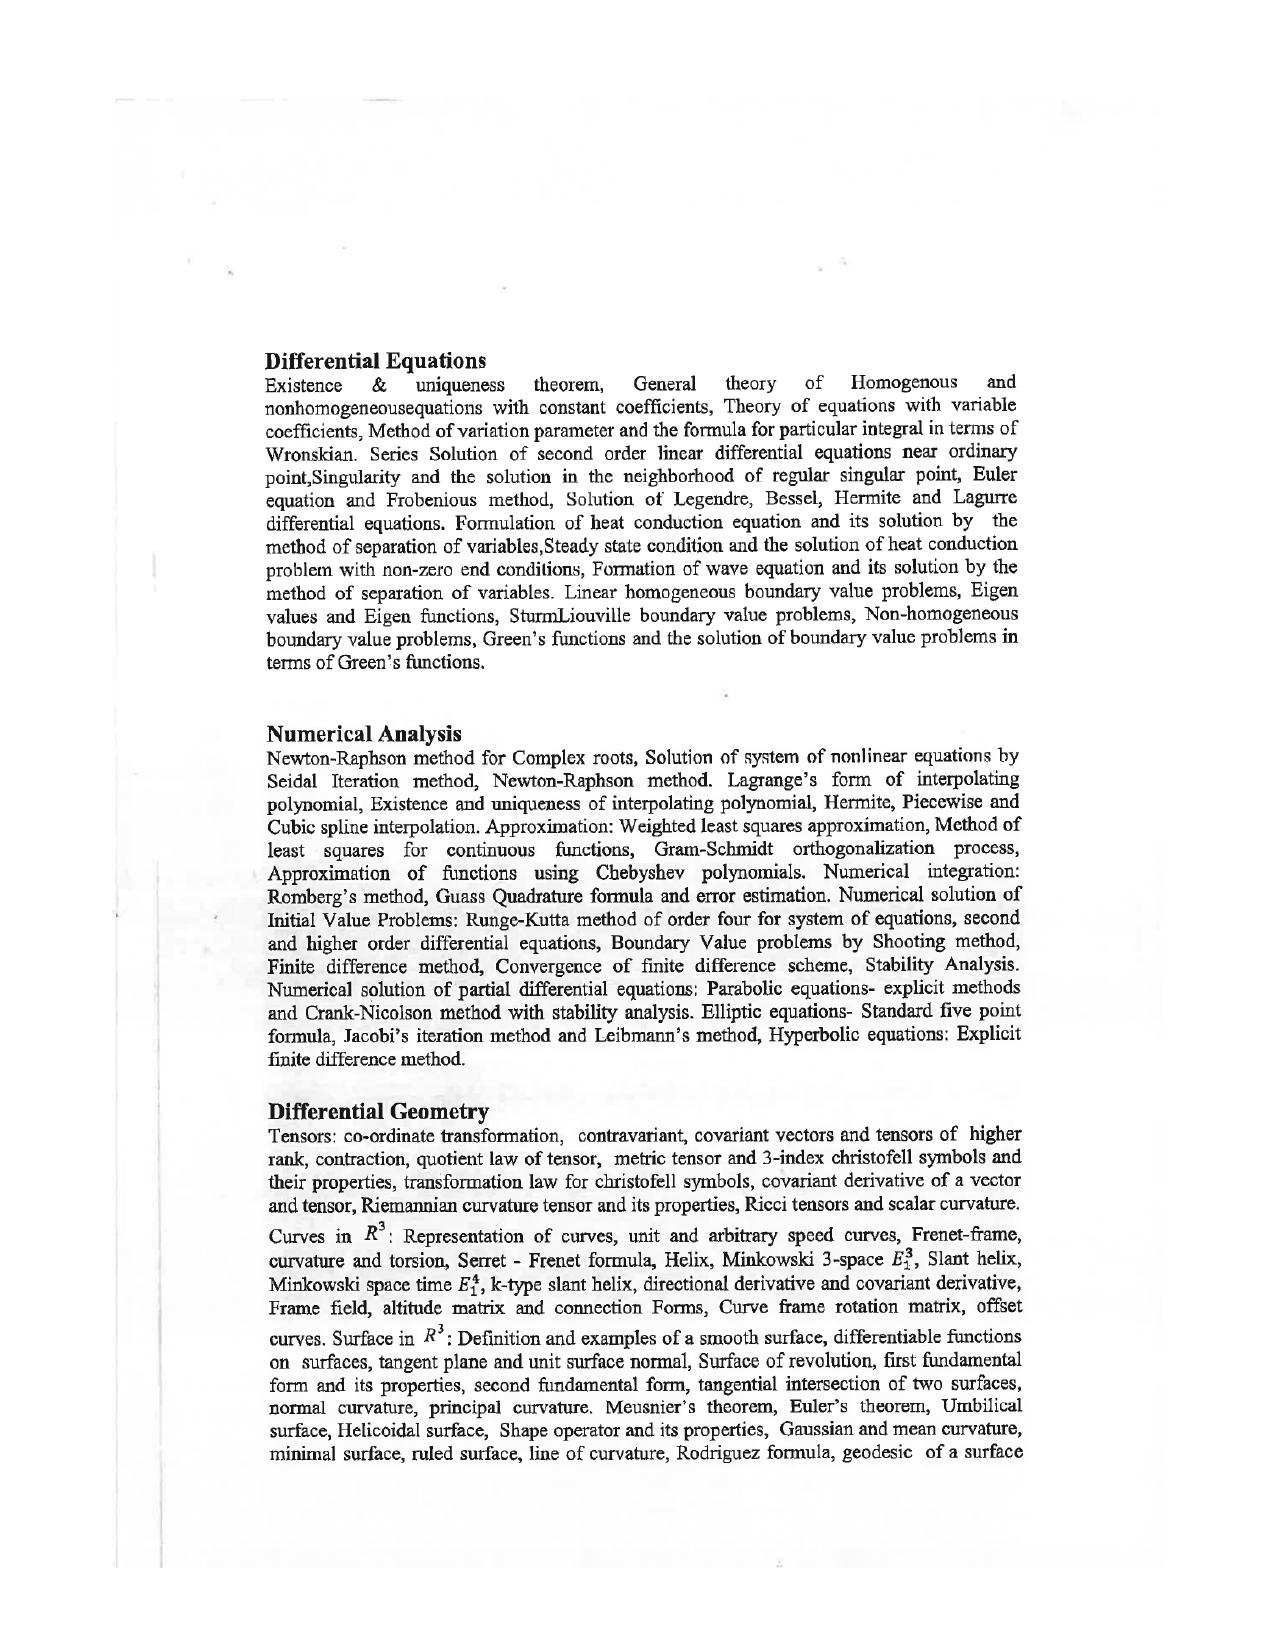 JMI Entrance Exam FACULTY OF NATURAL SCIENCES Syllabus - Page 38